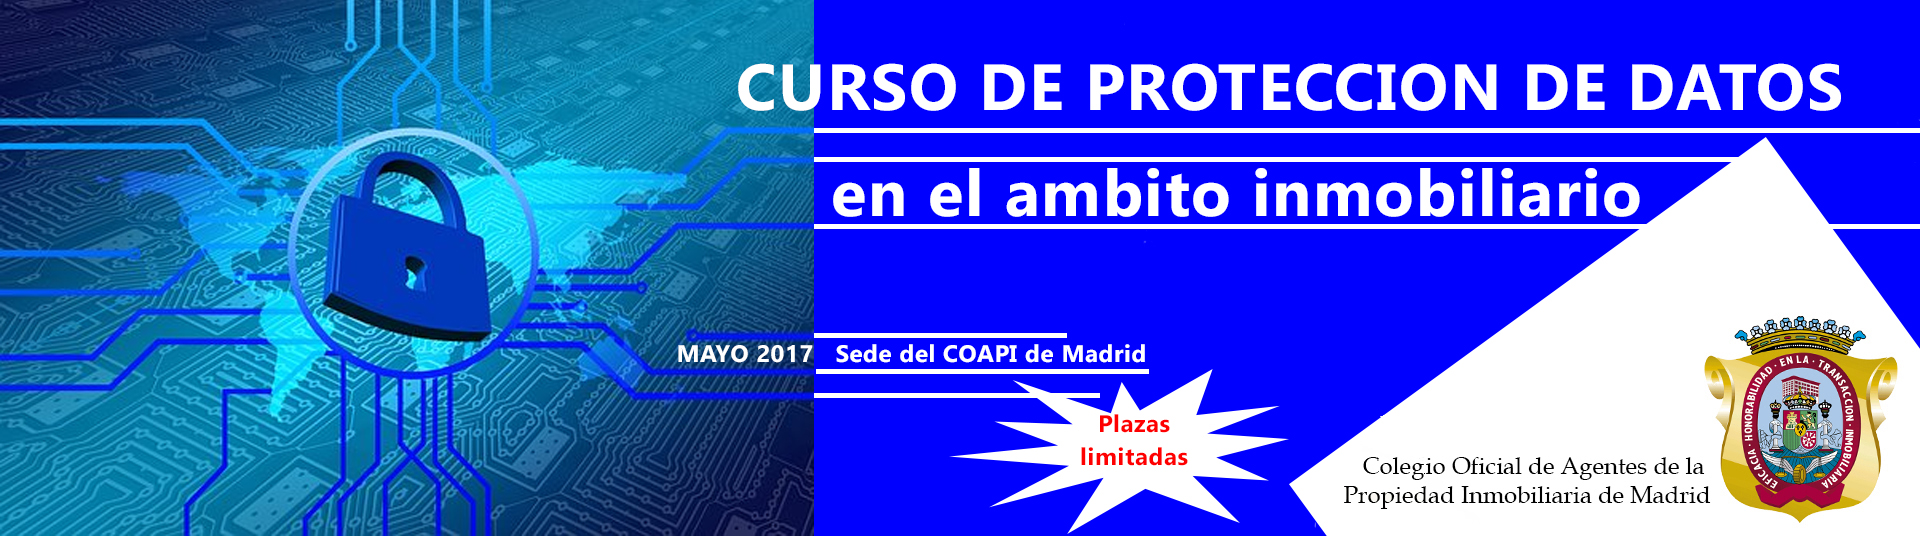 CARTEL CURSO PROTECCION DATOS COAPI MADRID